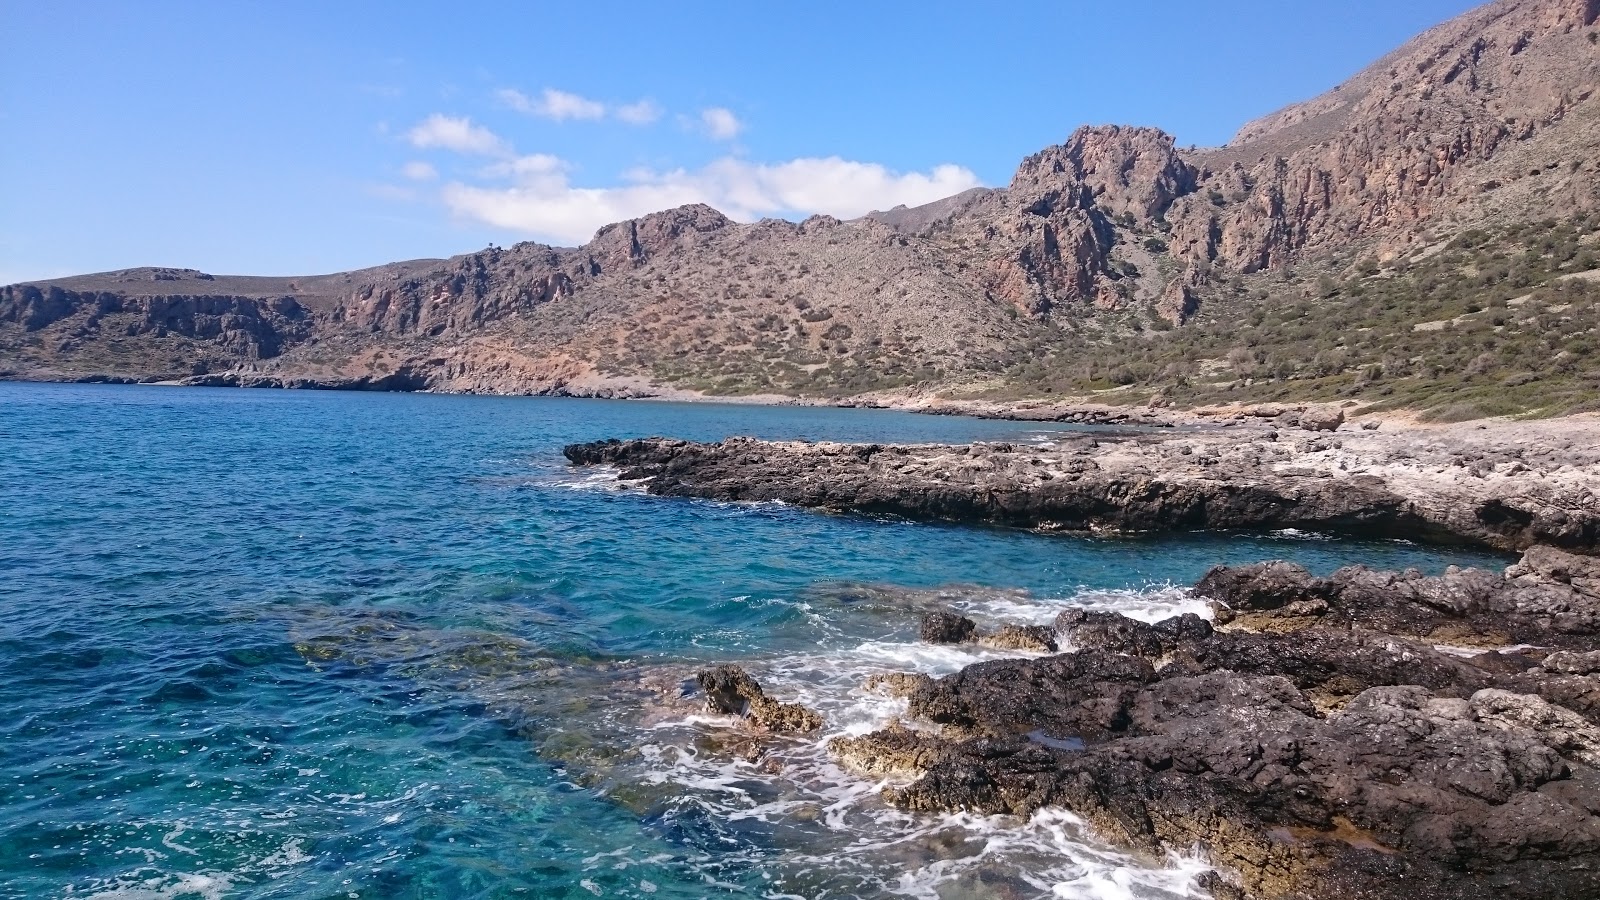 Fotografija Salamia beach z sivi kamenček površino